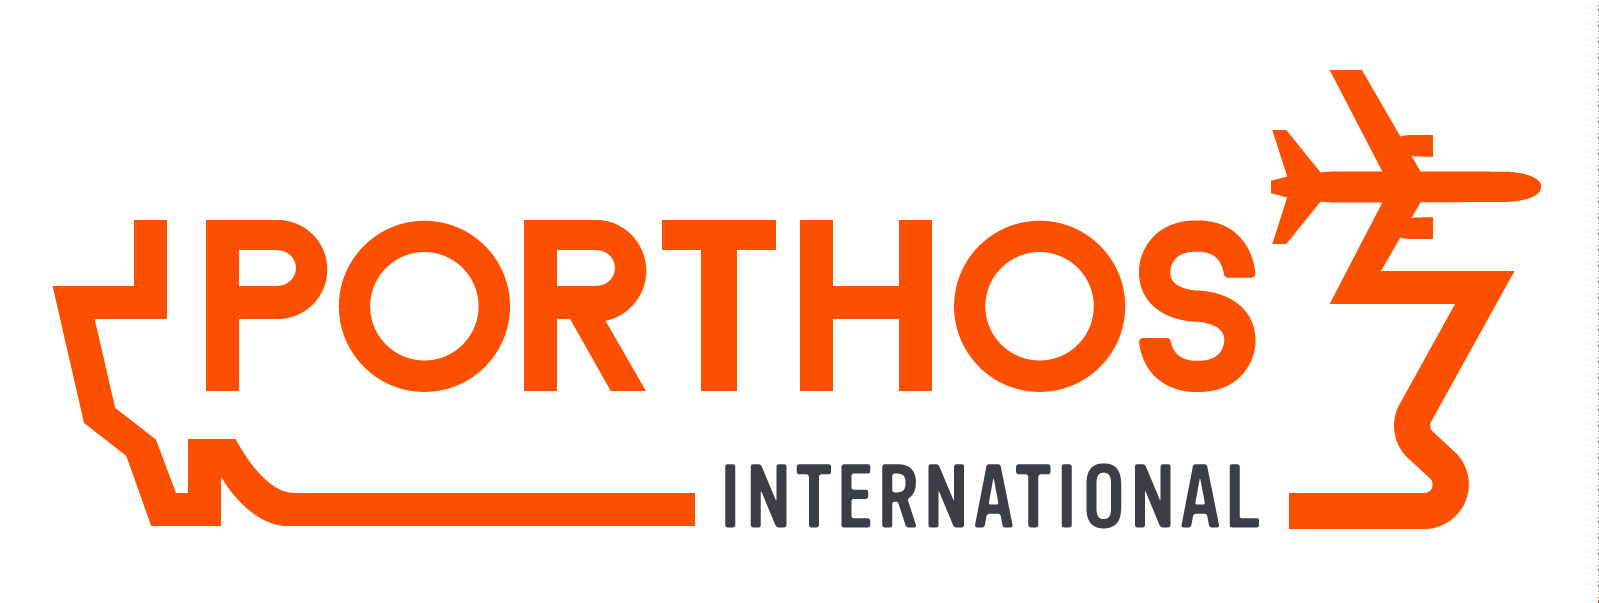 Porthos International